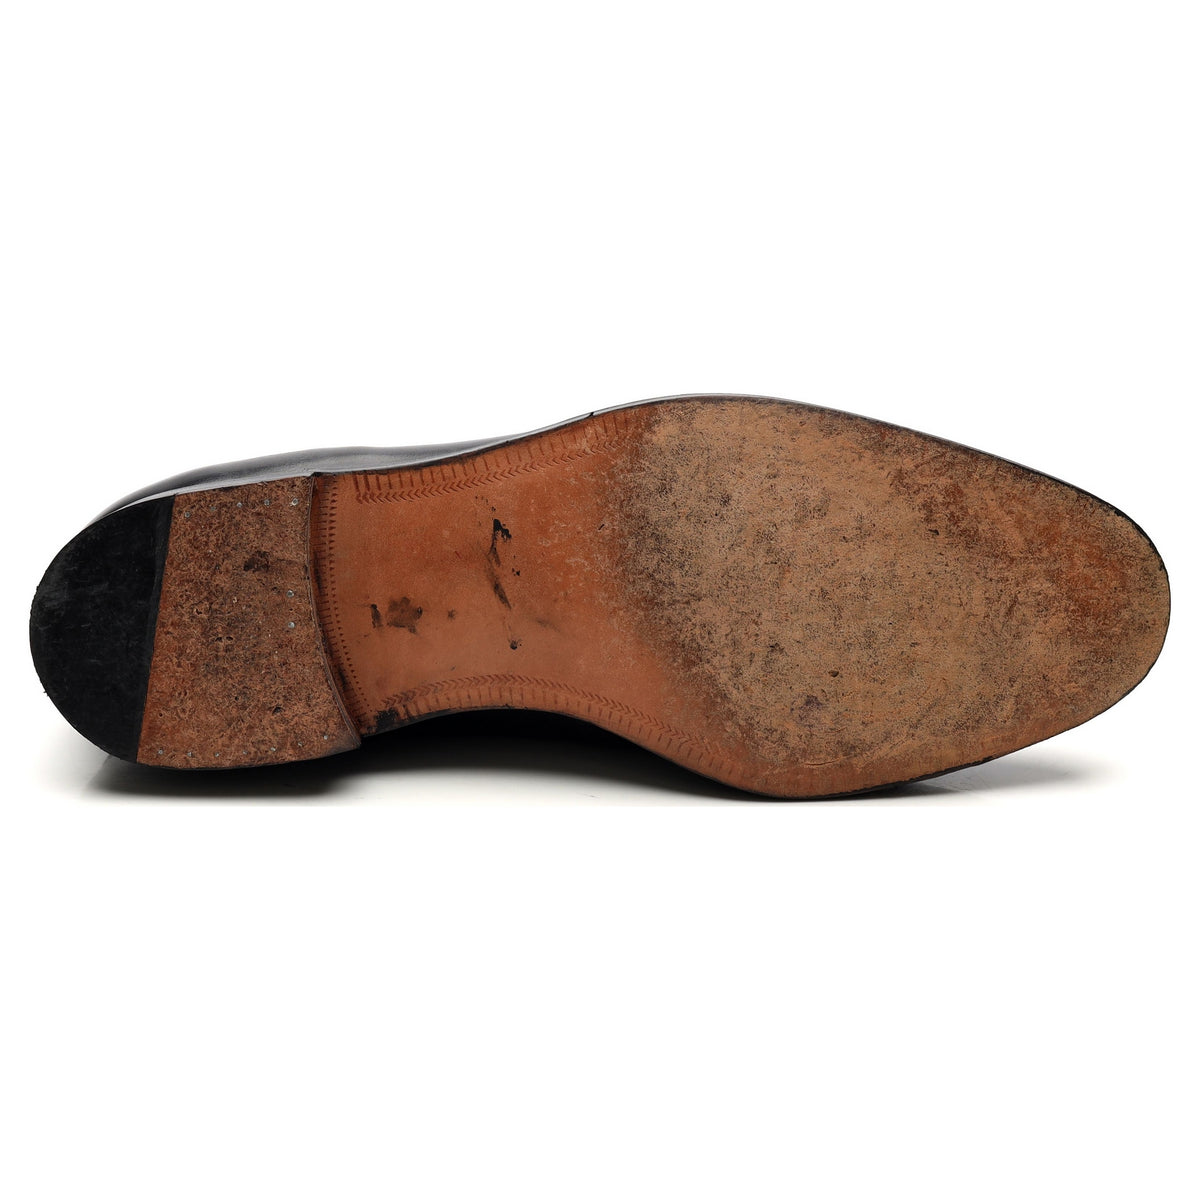 Black Leather Tassel Loafers UK 11